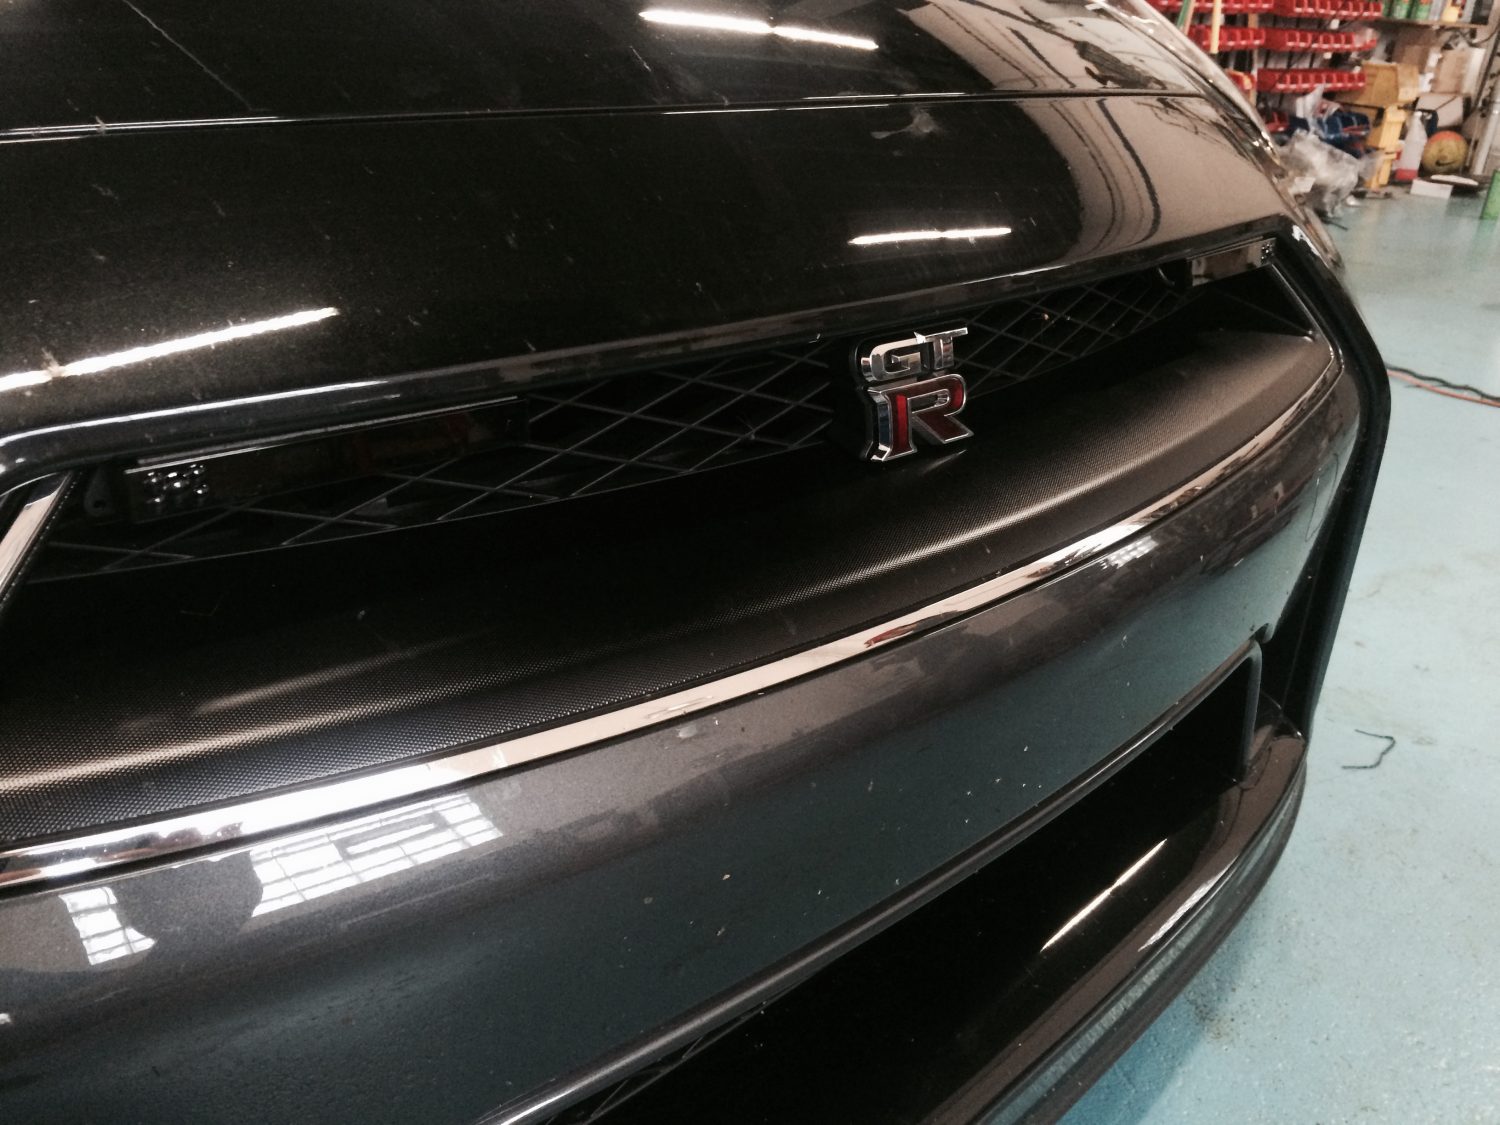 K40 front laser defusers on a 2015 Nissan GT-R